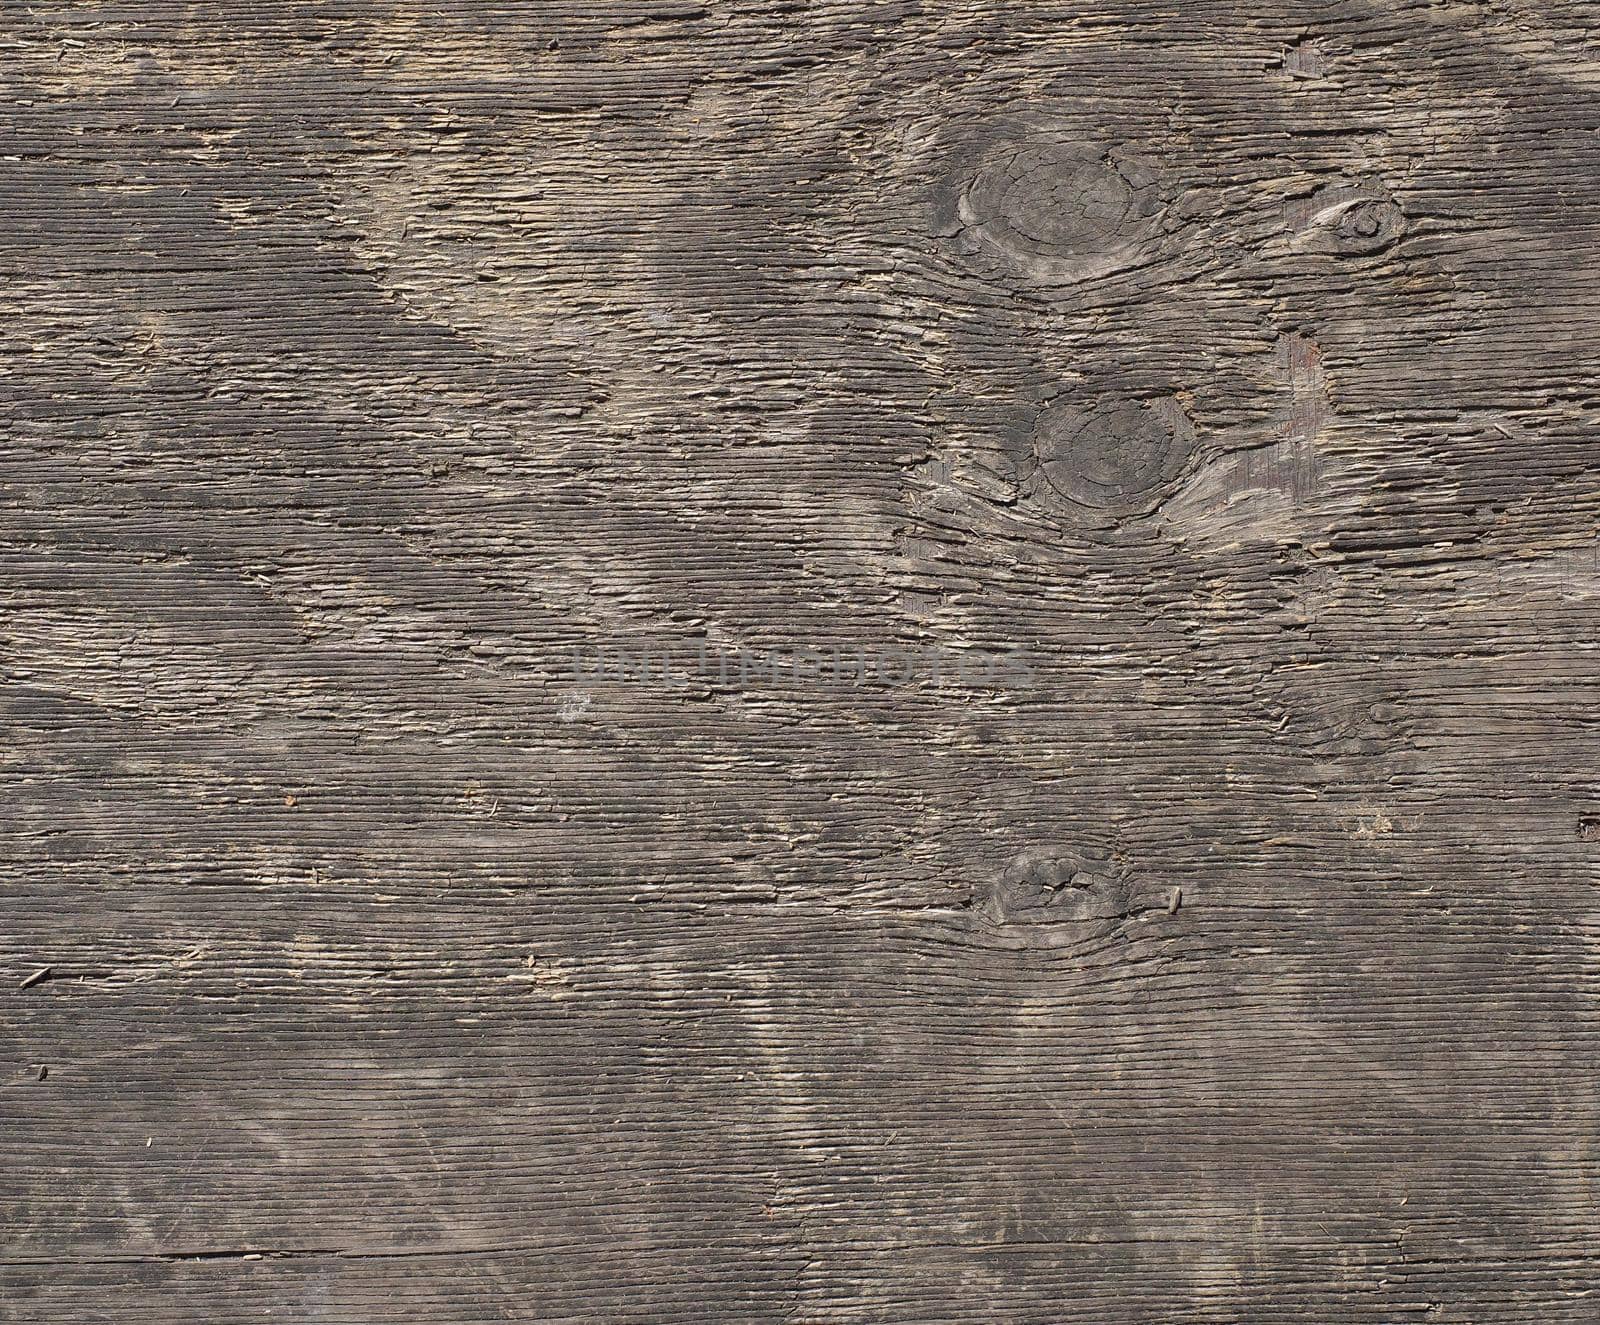 dark brown wood texture background by claudiodivizia